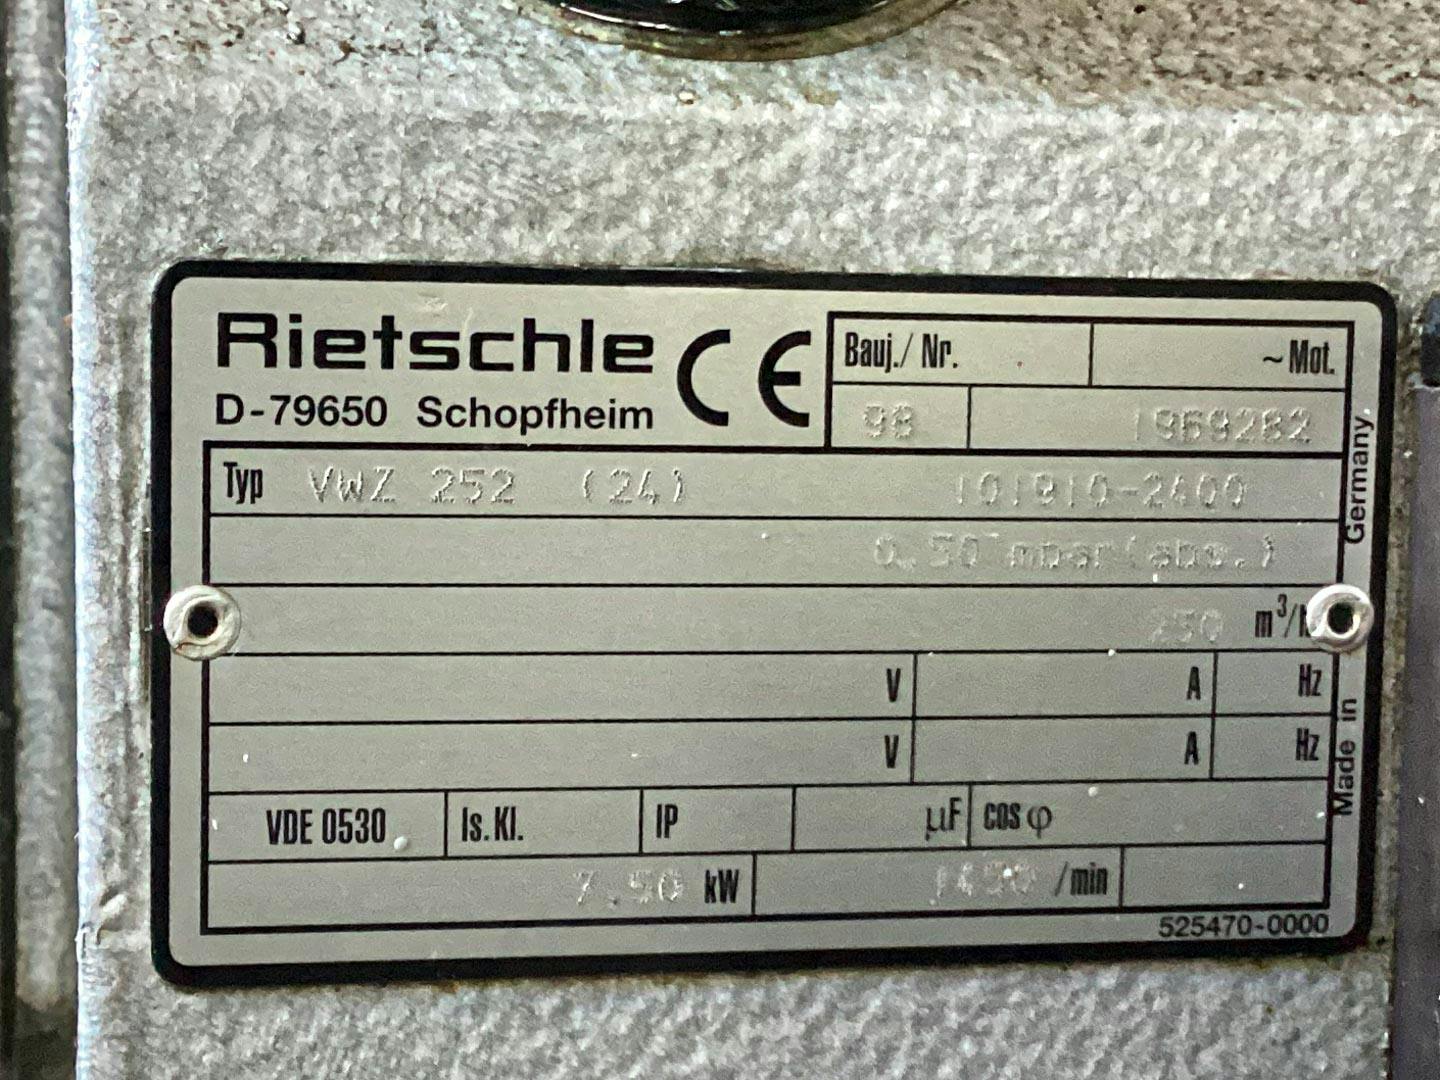 Rietschle VWZ 252 (24) - Bomba de vacío - image 7